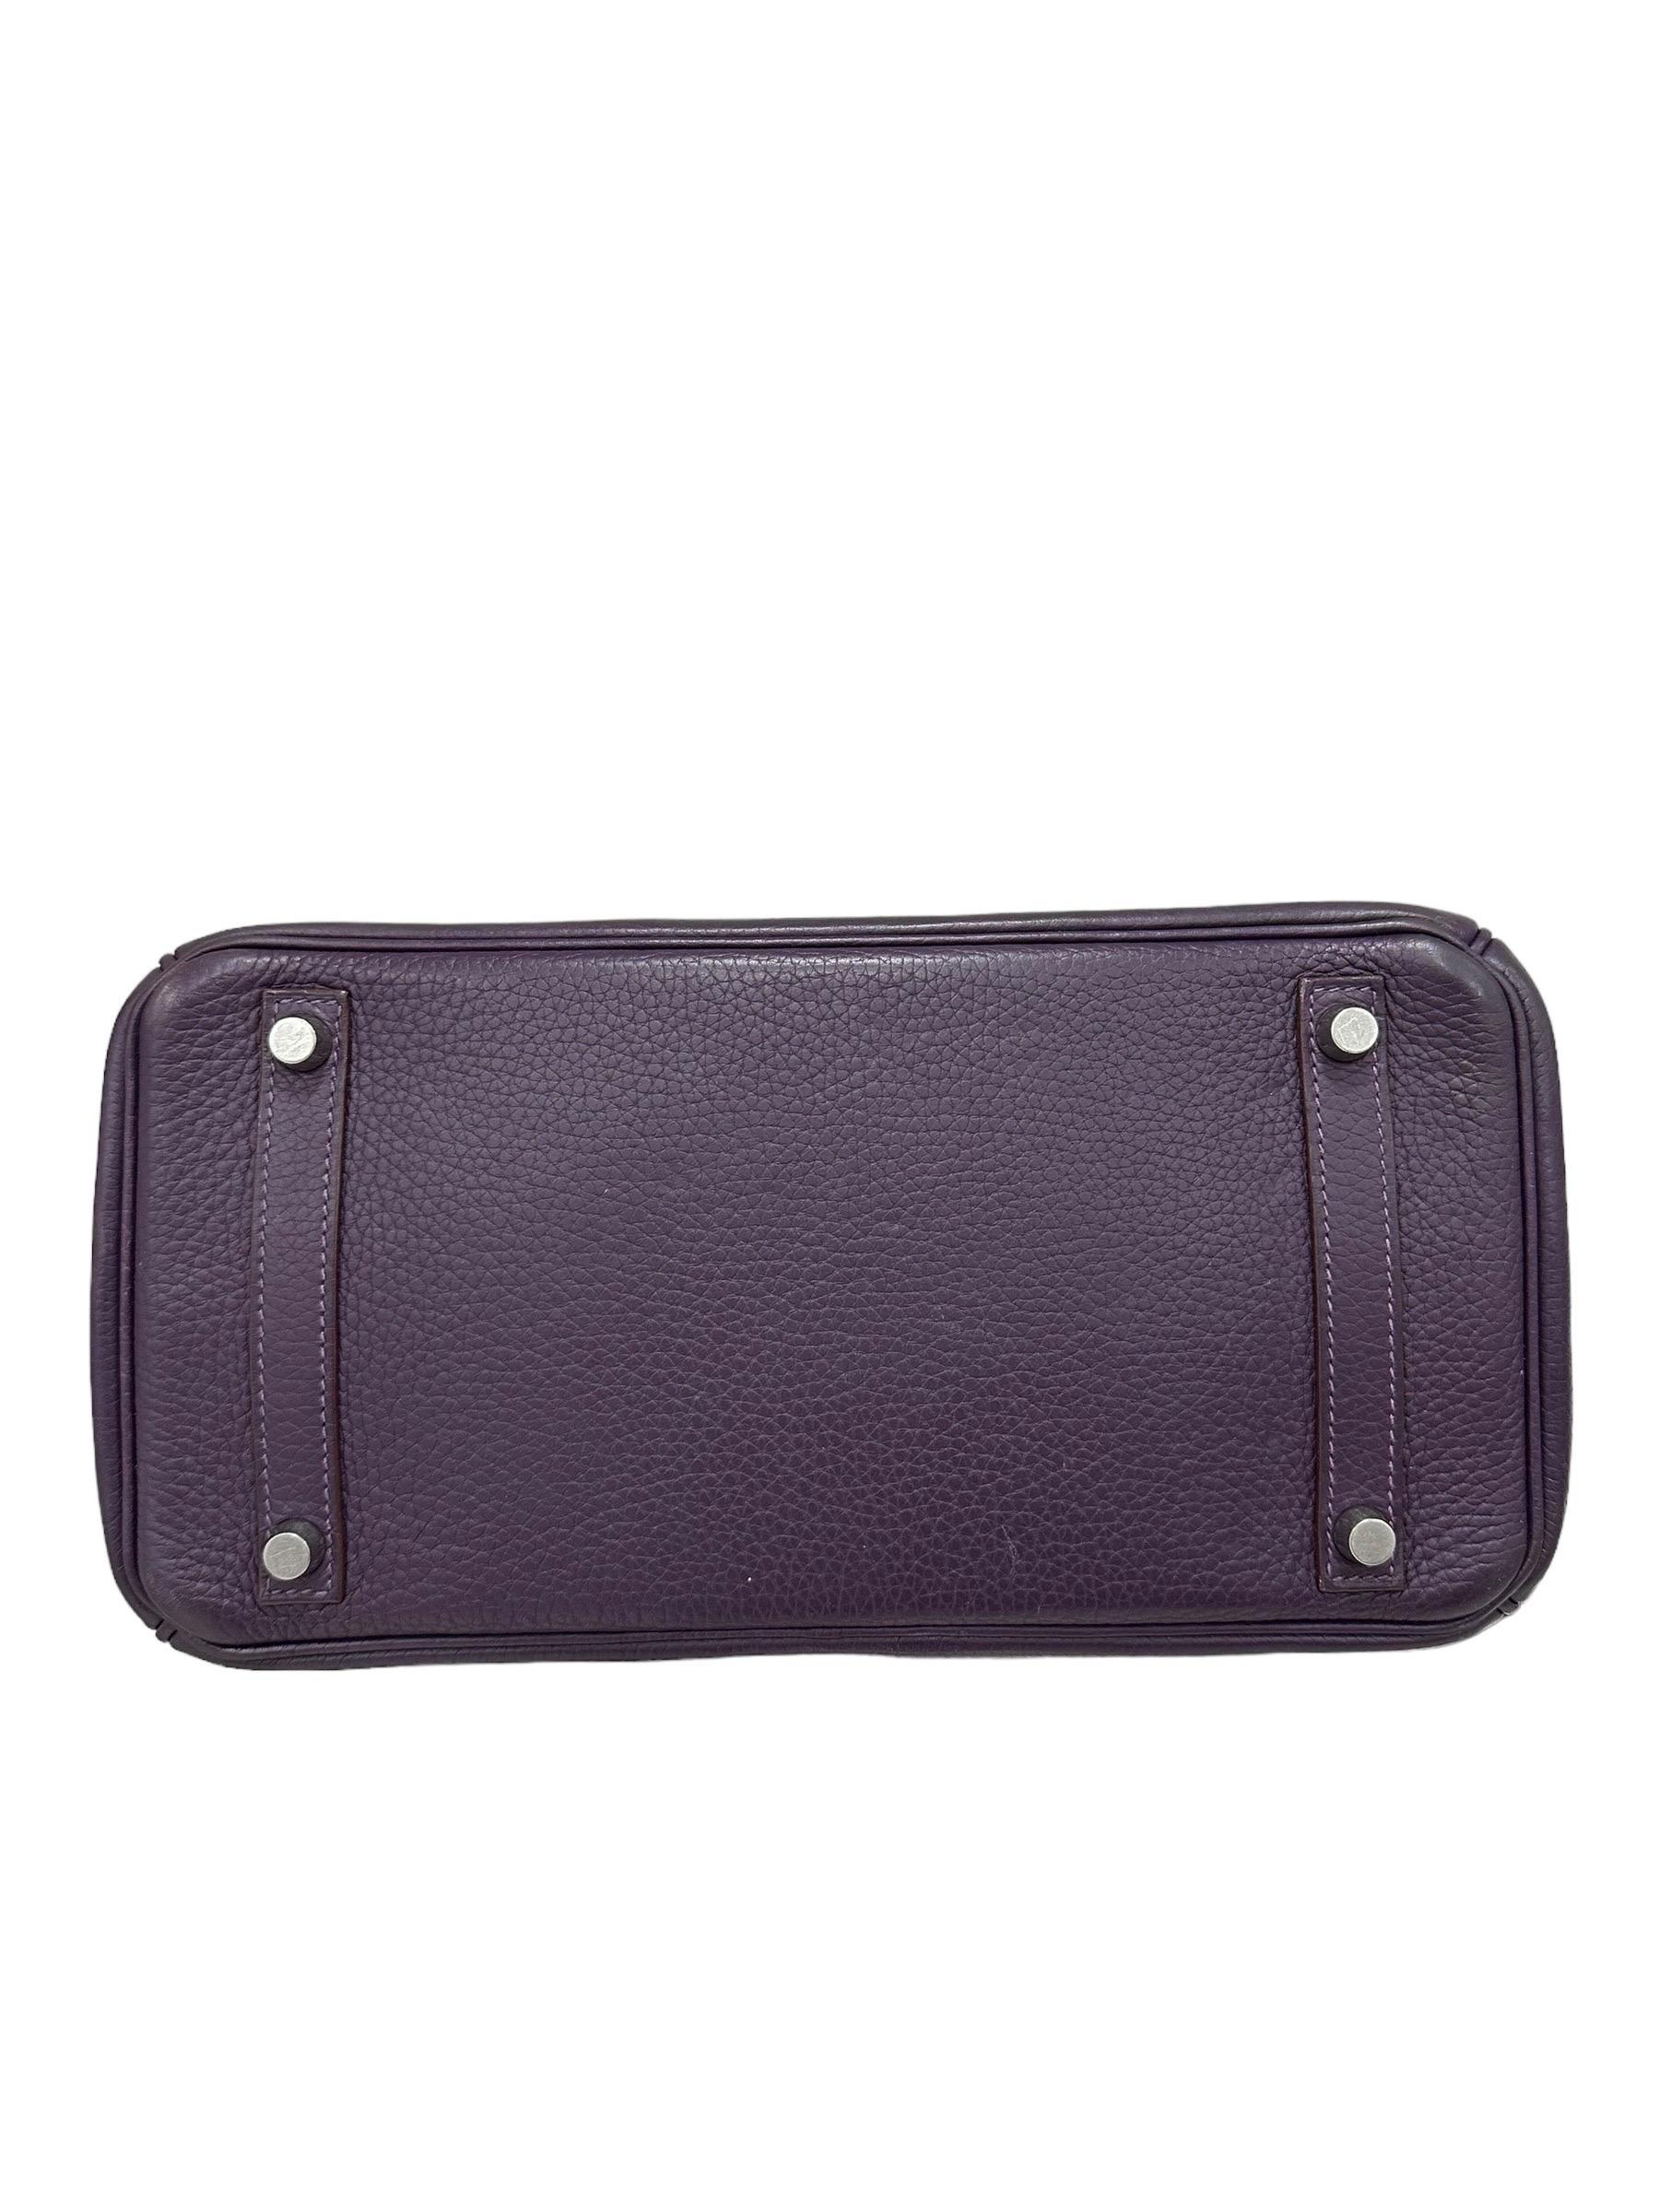 2007 Hermès Birkin 30 Clemence Leather Violet Raisin Top Handle Bag For Sale 7